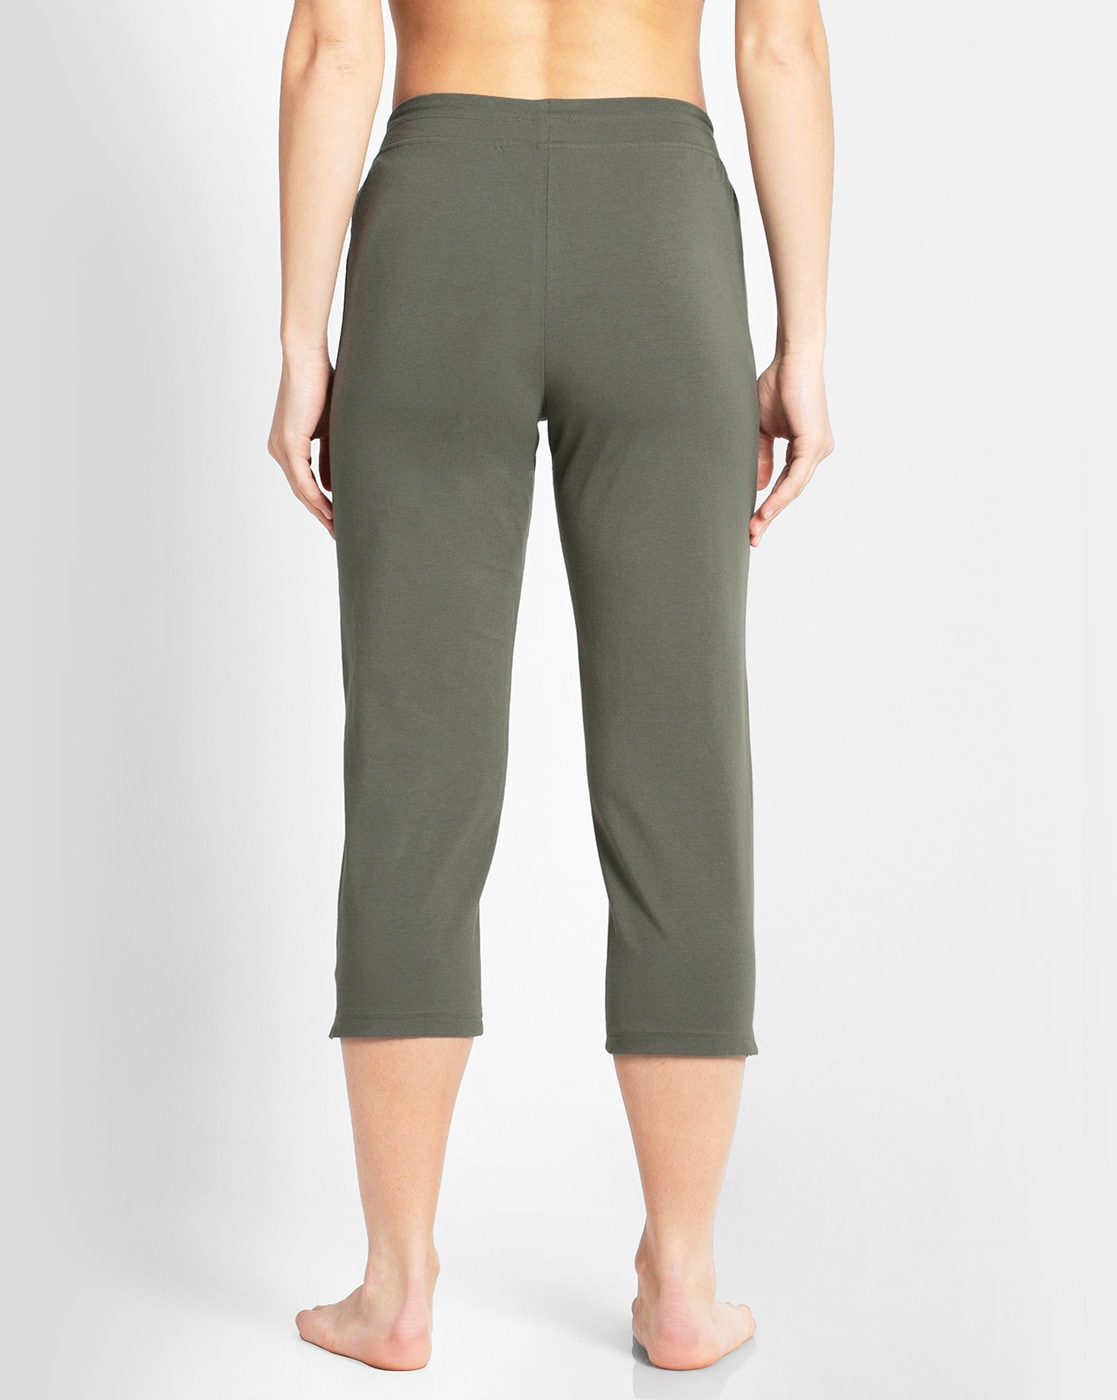 Buy Olive Green Pyjamas & Shorts for Women by JOCKEY Online